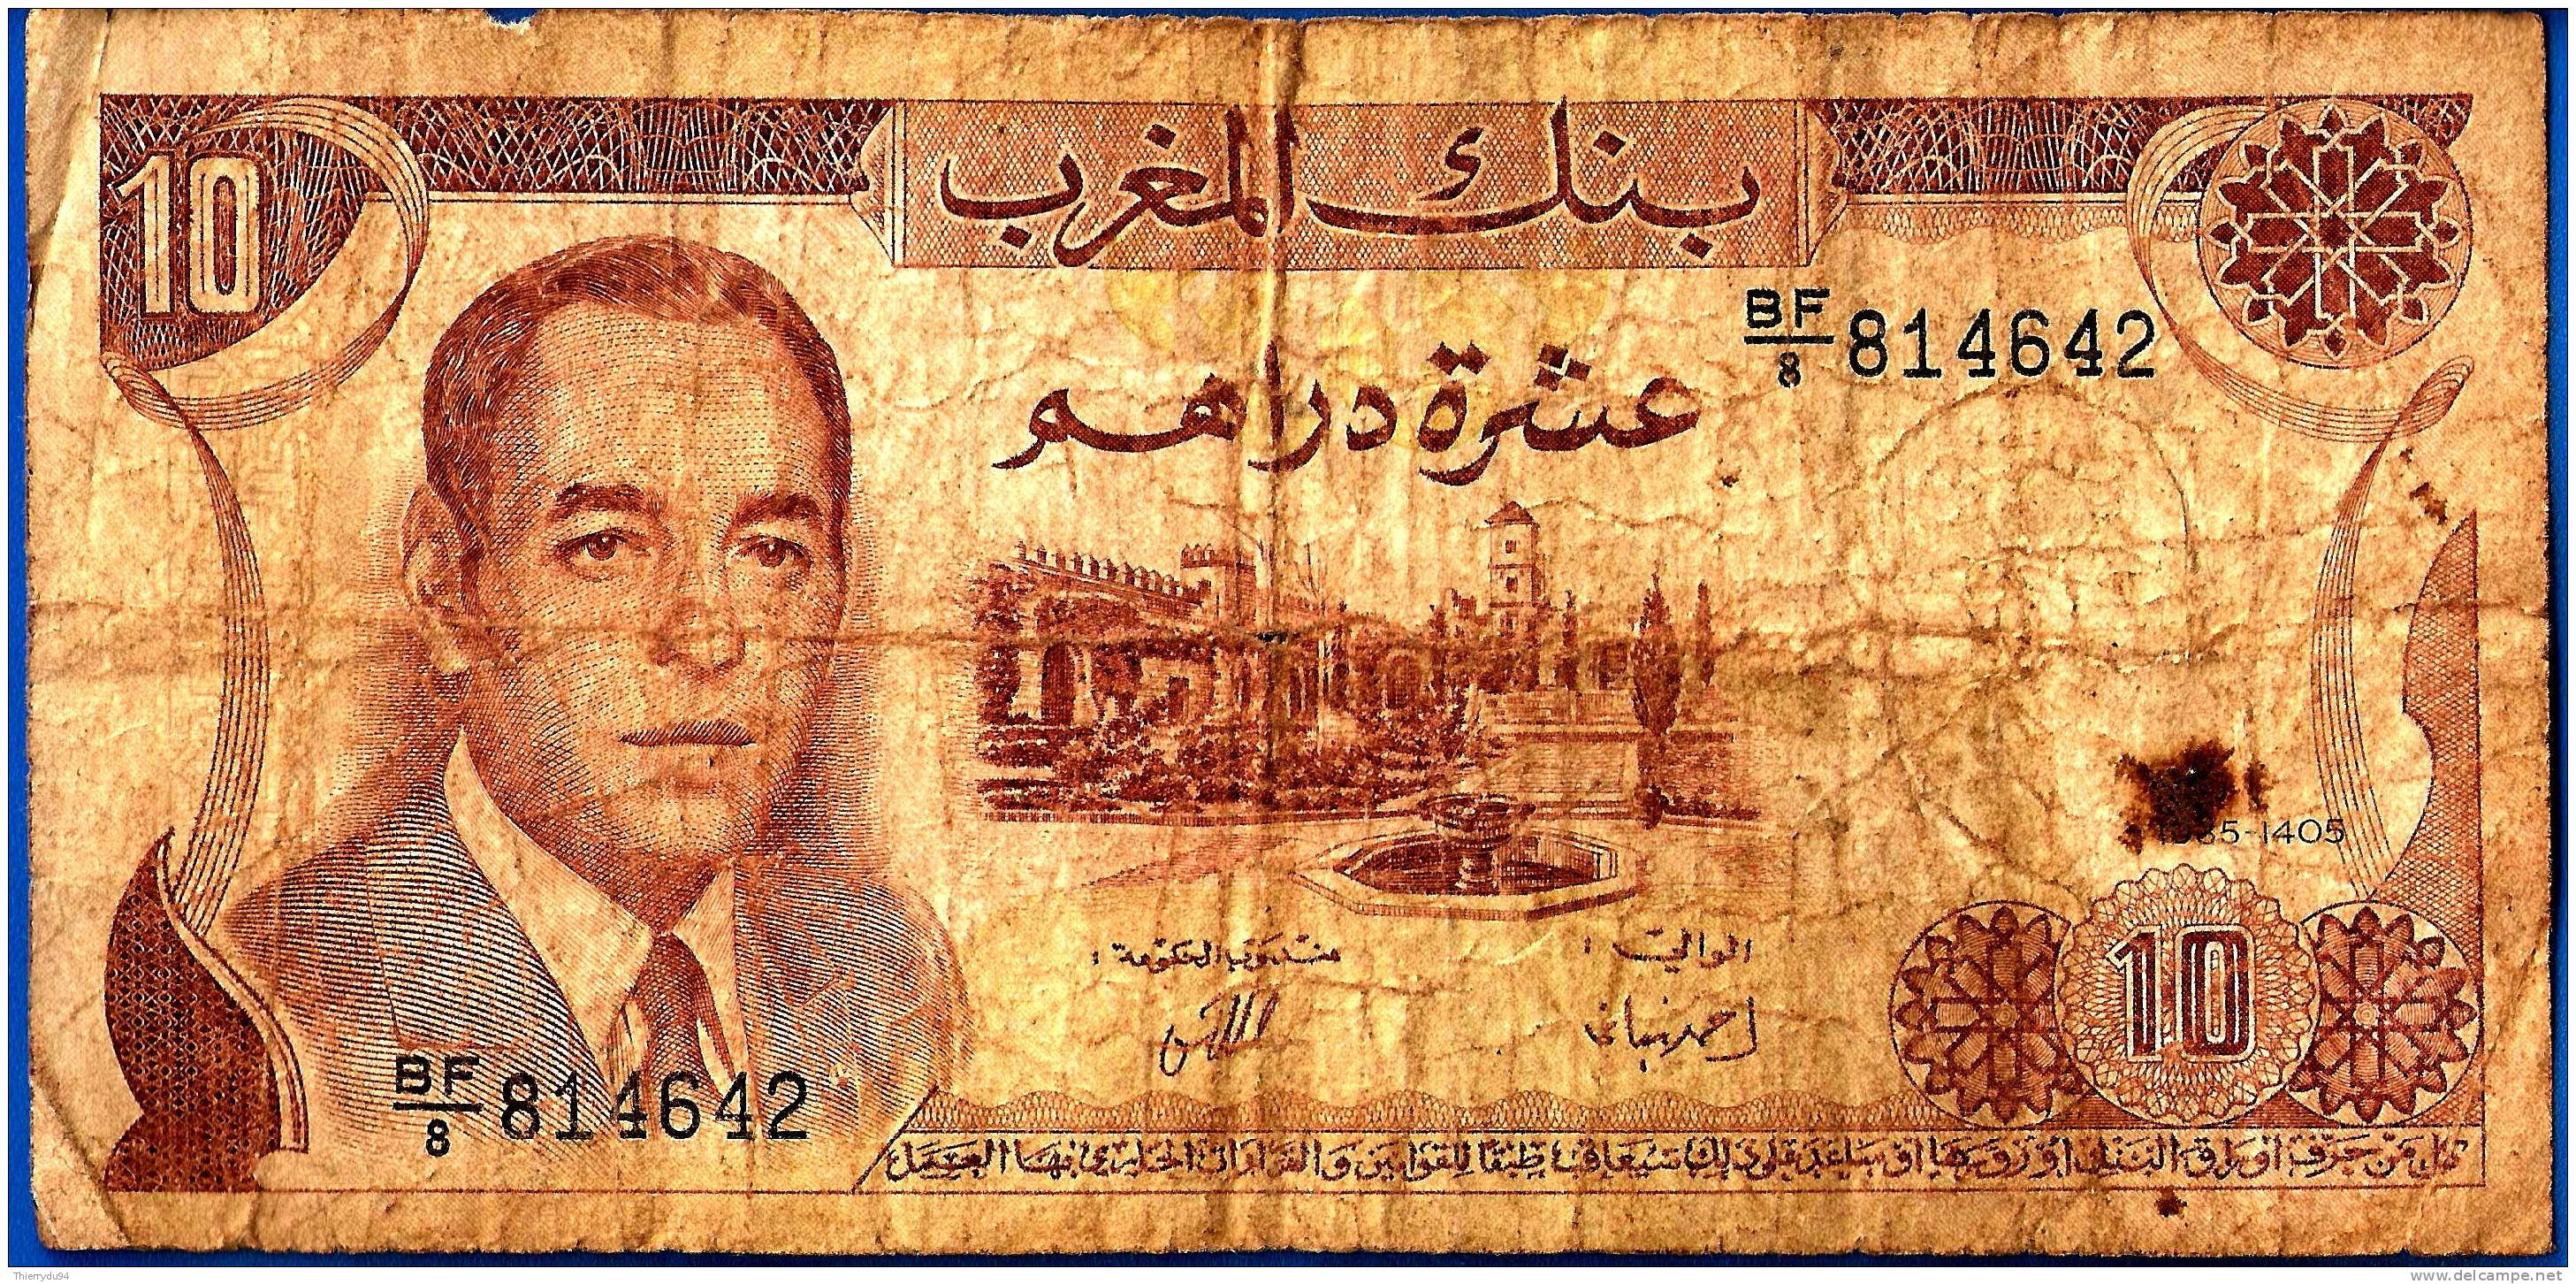 Maroc 10 Dirhams 1985 Signature 9 Morocco Afrique Africa Paypal Moneybookers OK - Marocco